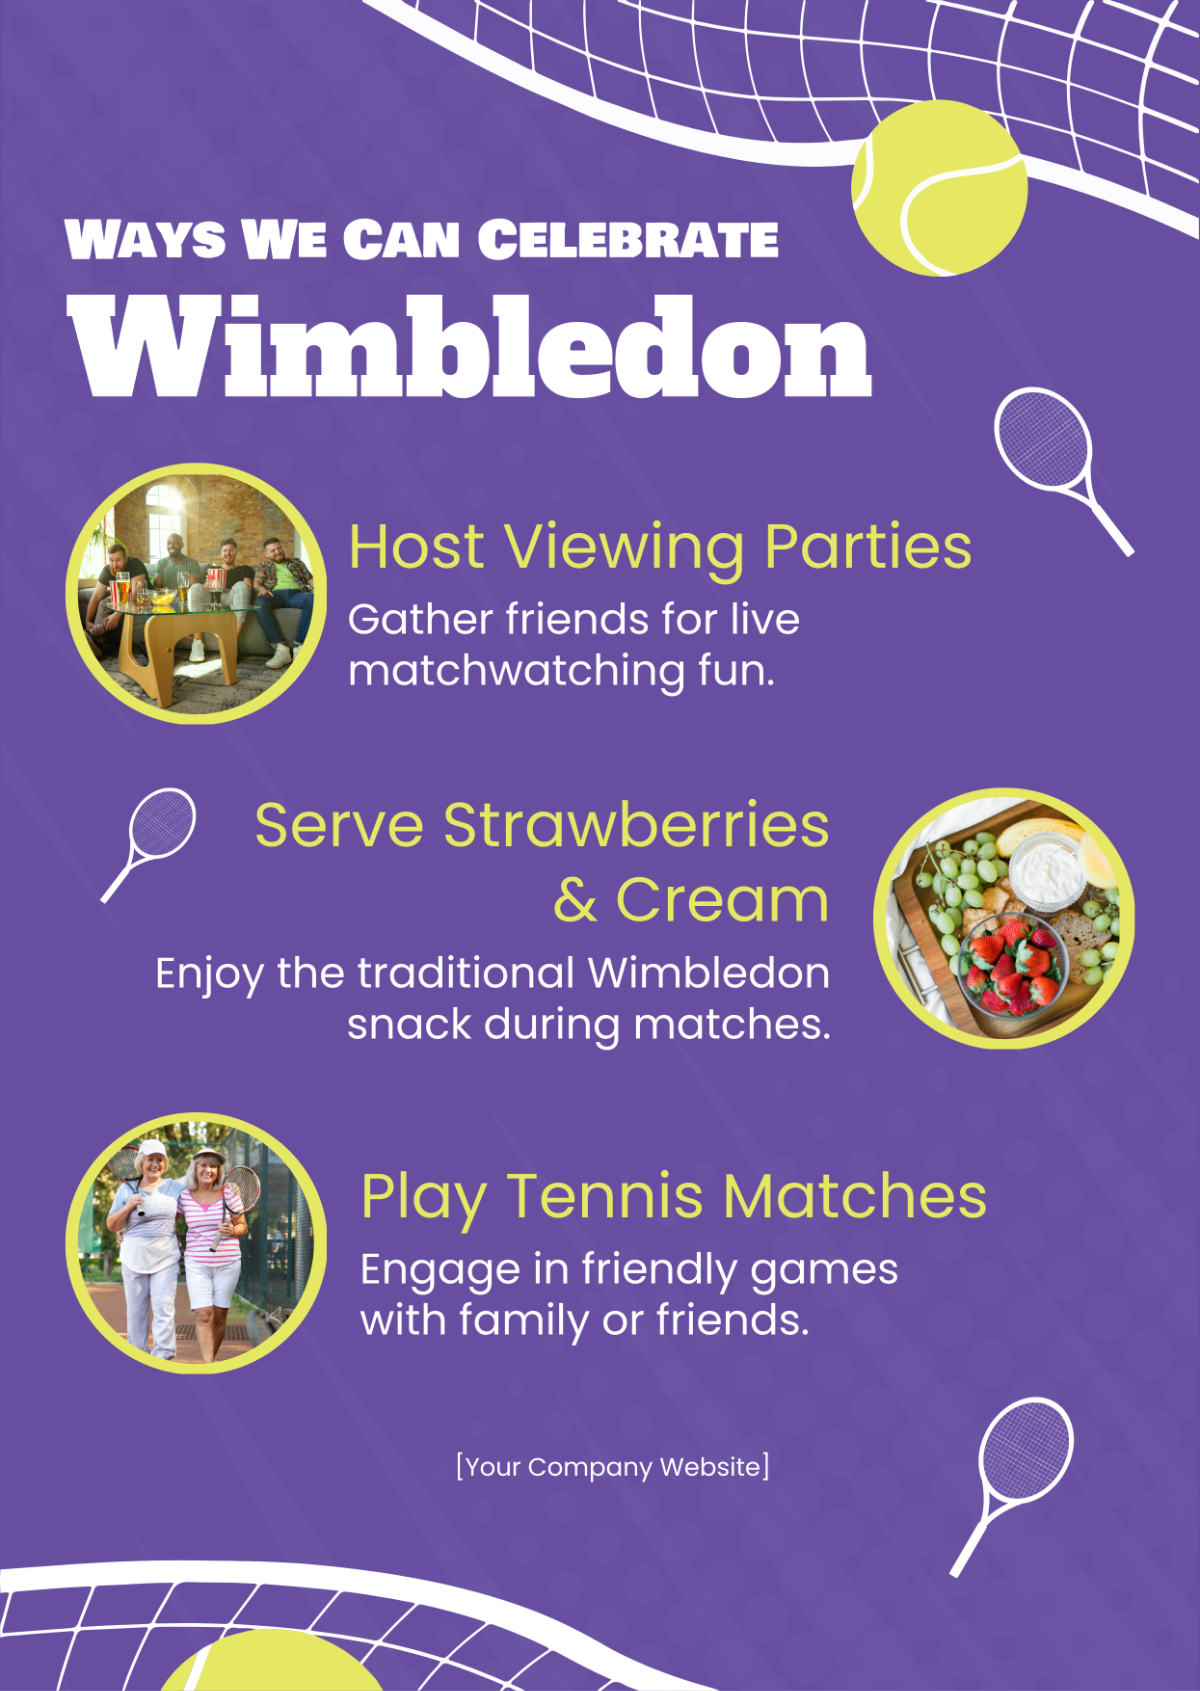 How do you Celebrate Wimbledon?